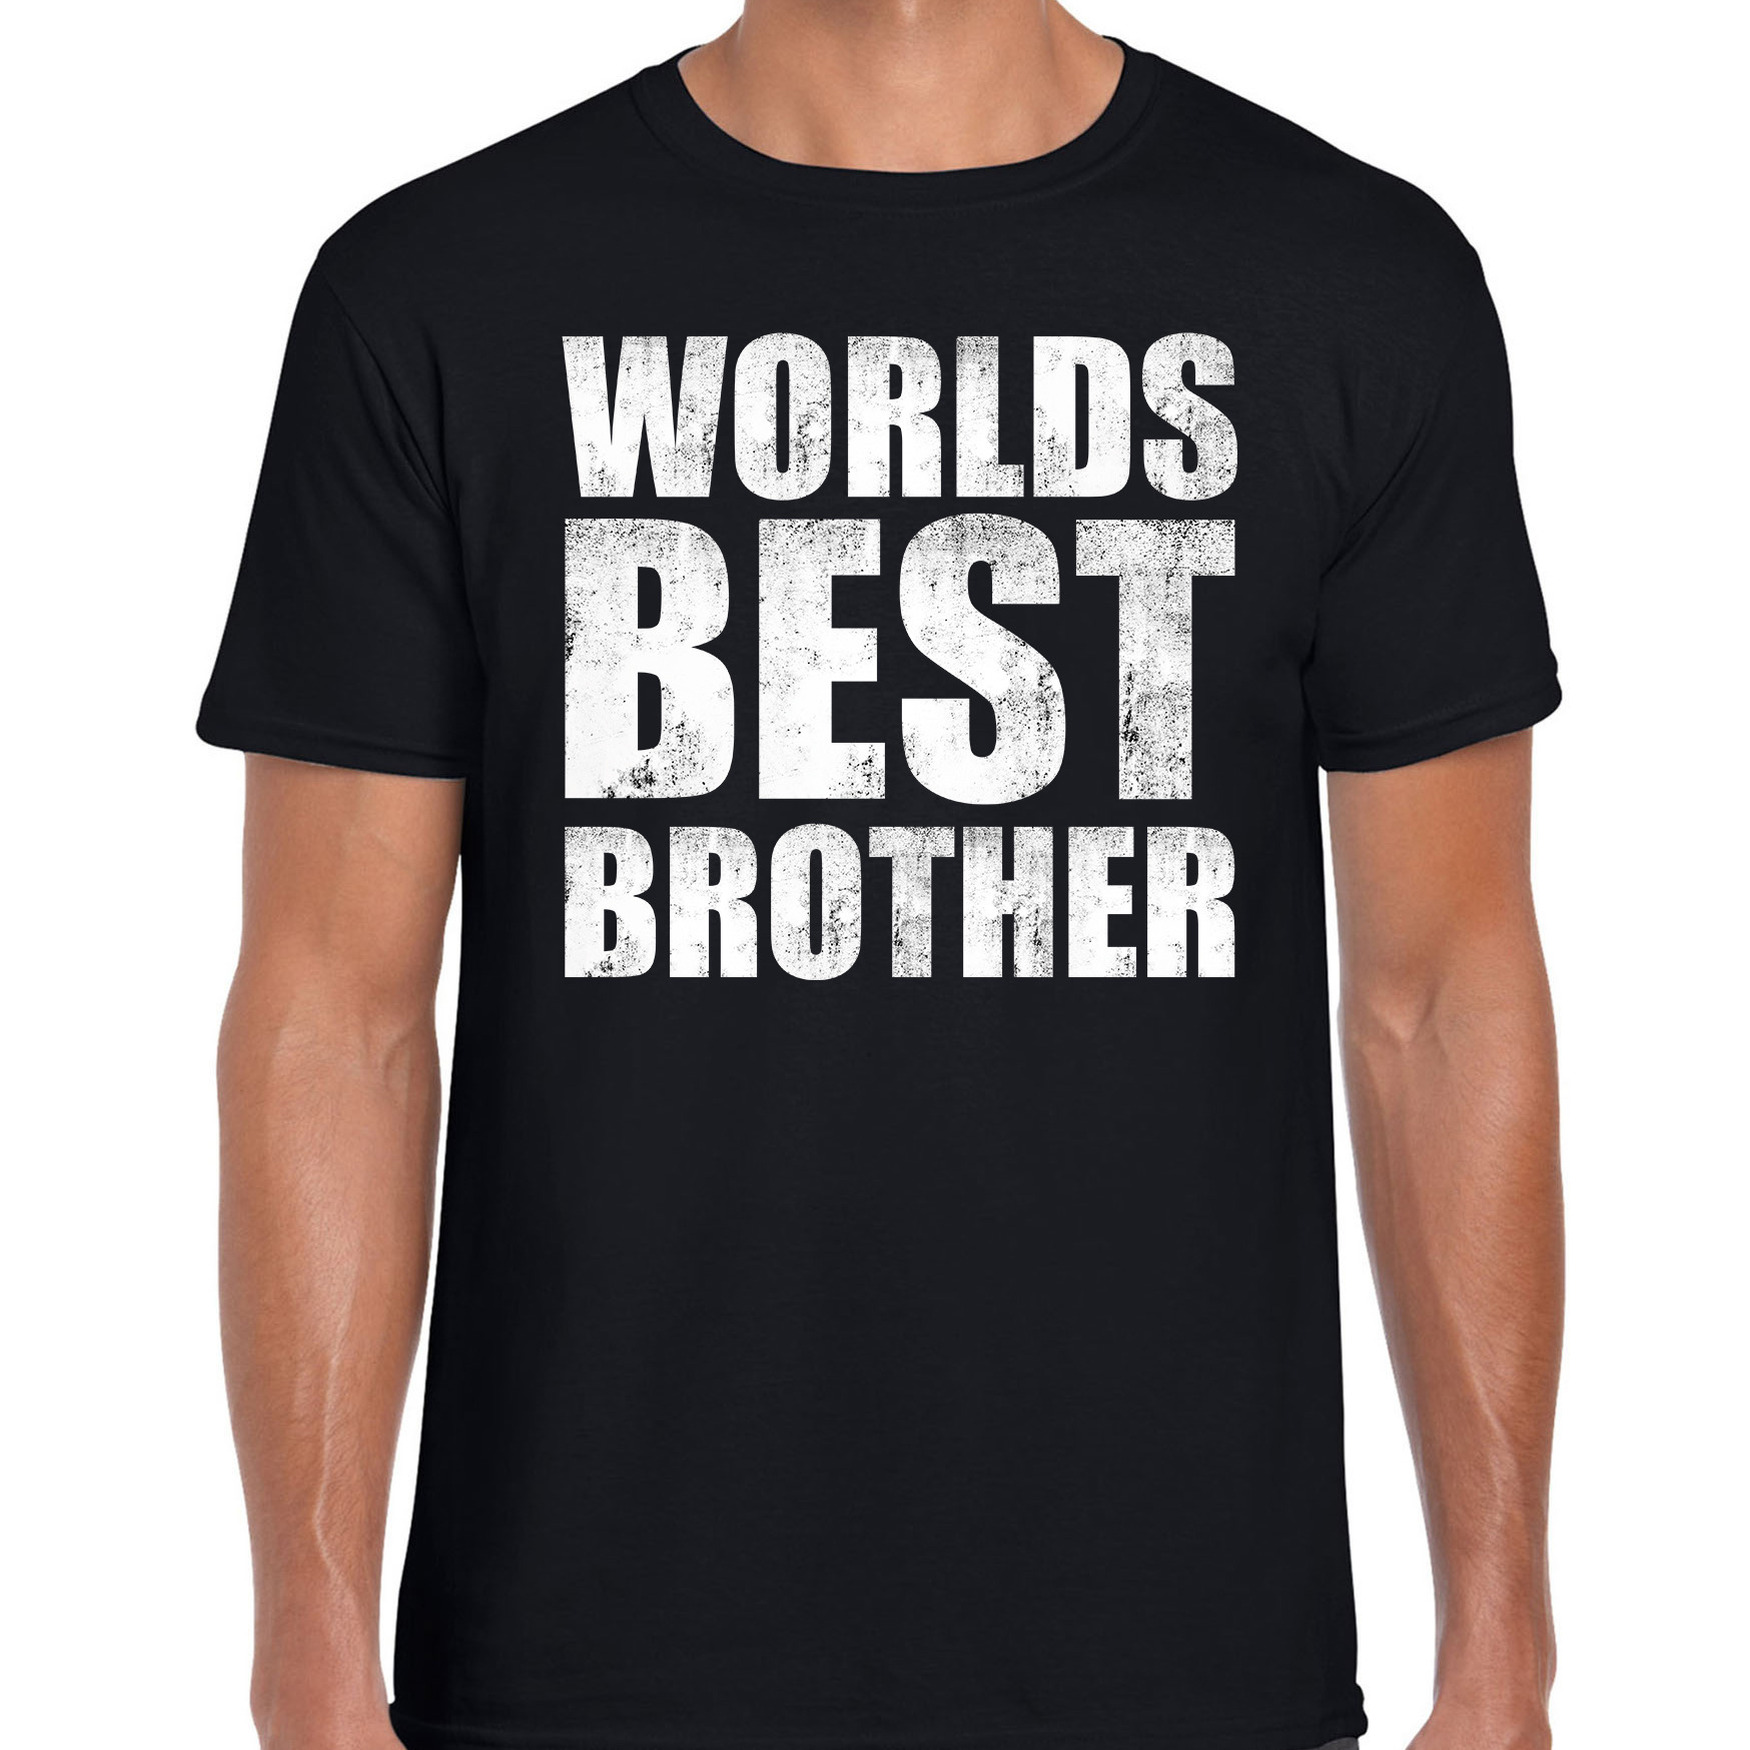 Worlds best brother cadeau t-shirt zwart voor heren